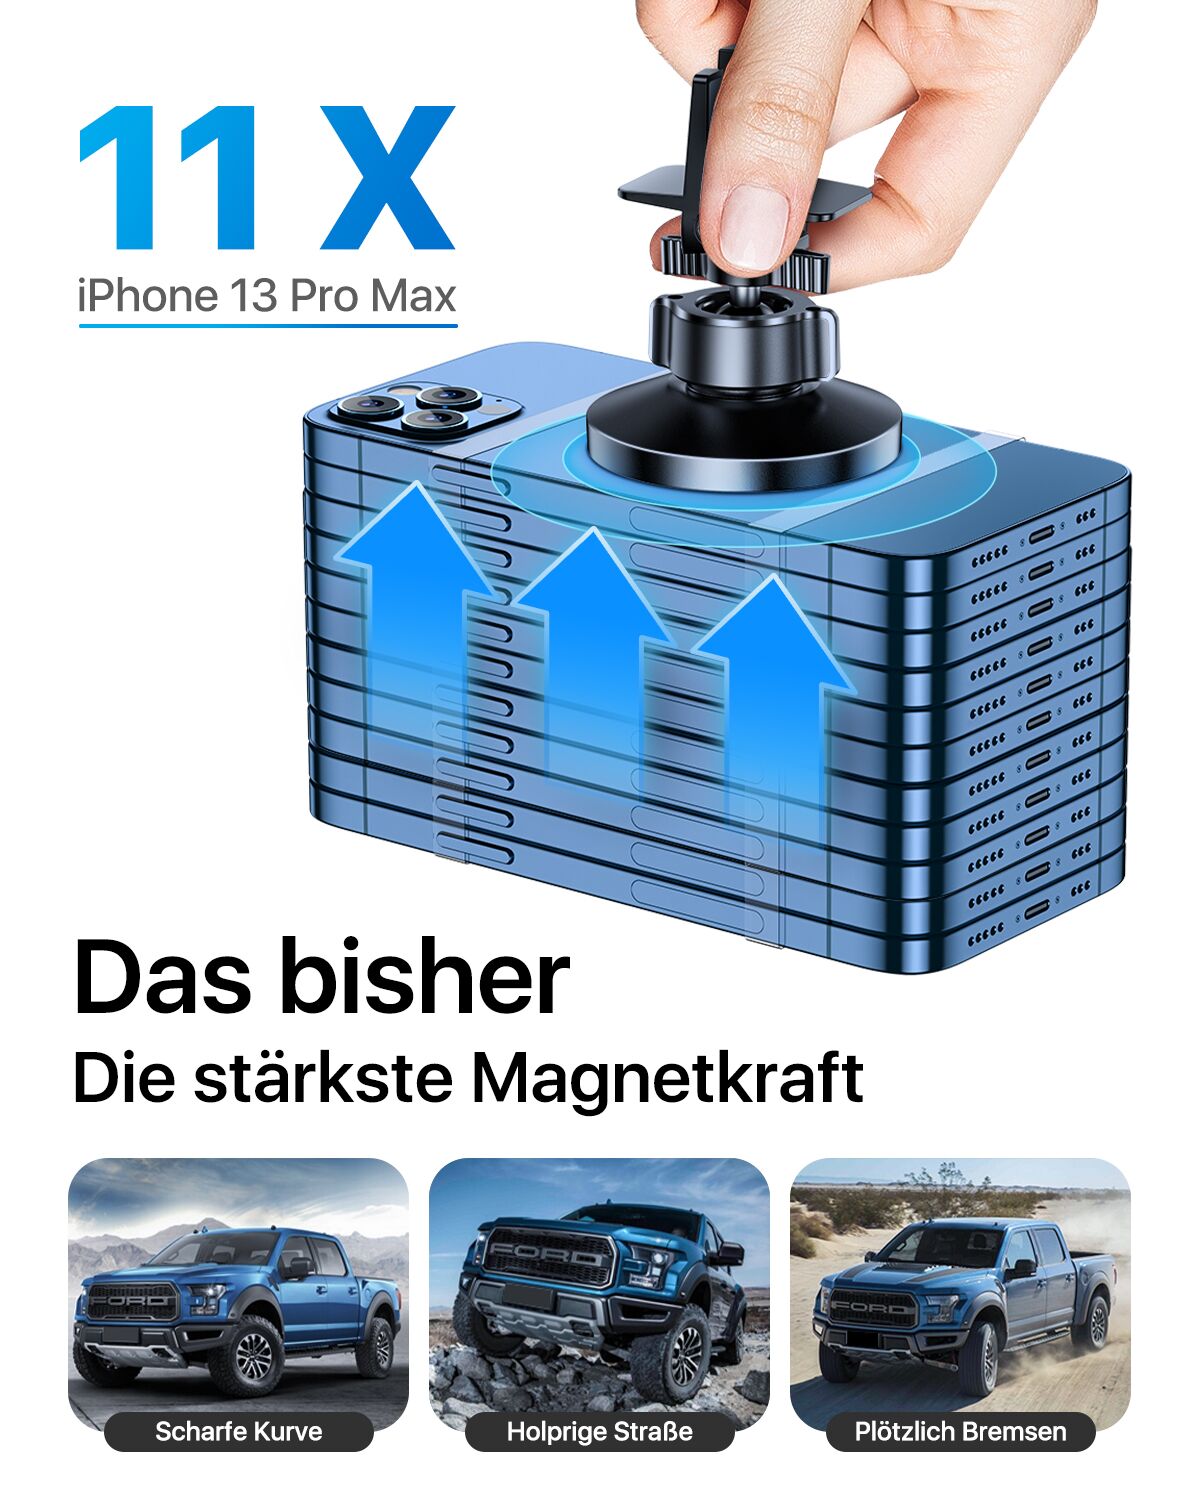 andobil Handyhalterung Auto Magnet, [20 stärkste Magnete] Kompatibel m –